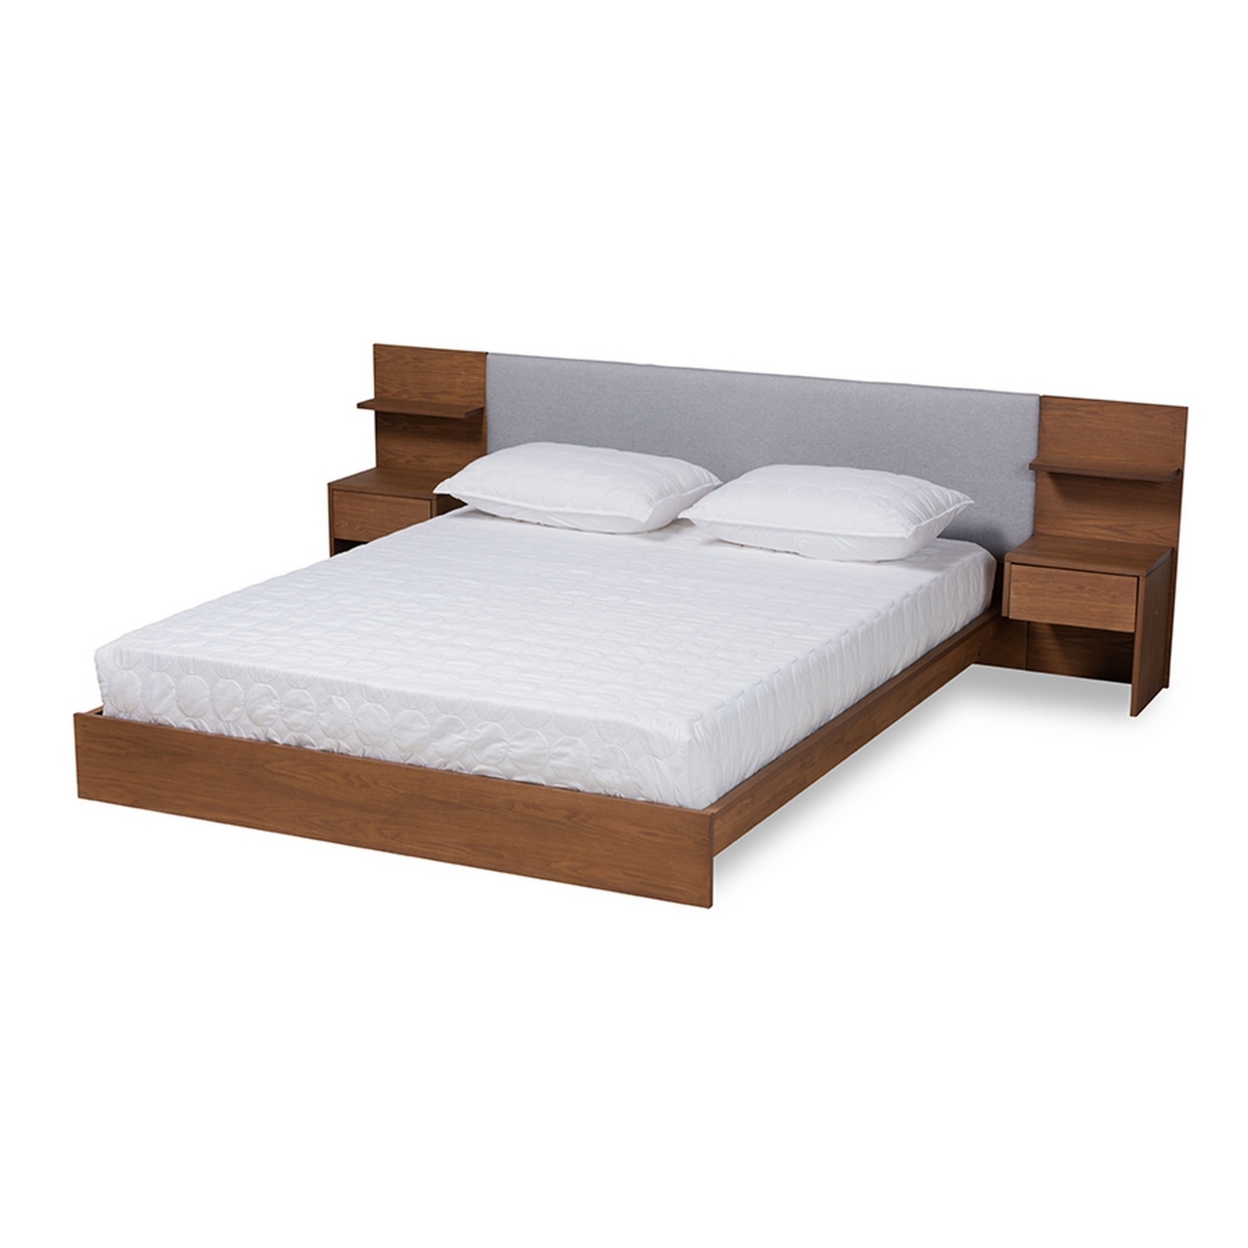 Sami Wood Queen Size Platform Storage Bed with Built-In Nightstands - image 1 of 5